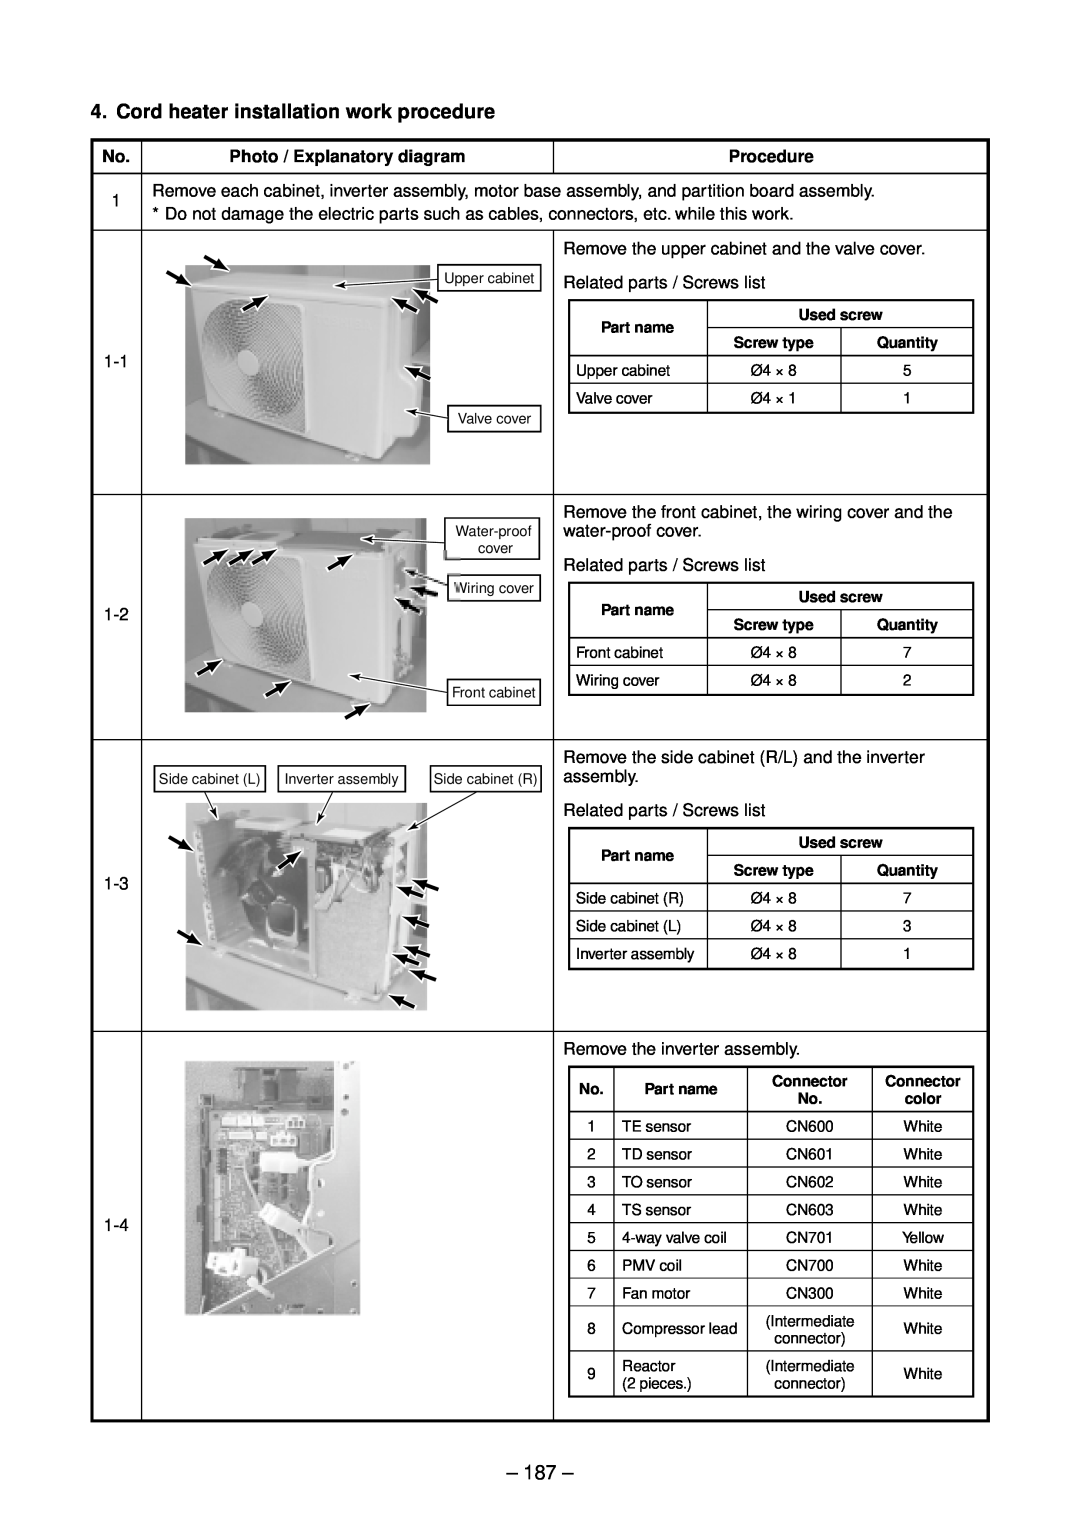 Toshiba RAV-SM562UT-E, RAV-SM1102UT-E Cord heater installation work procedure, 187, Photo / Explanatory diagram, Procedure 